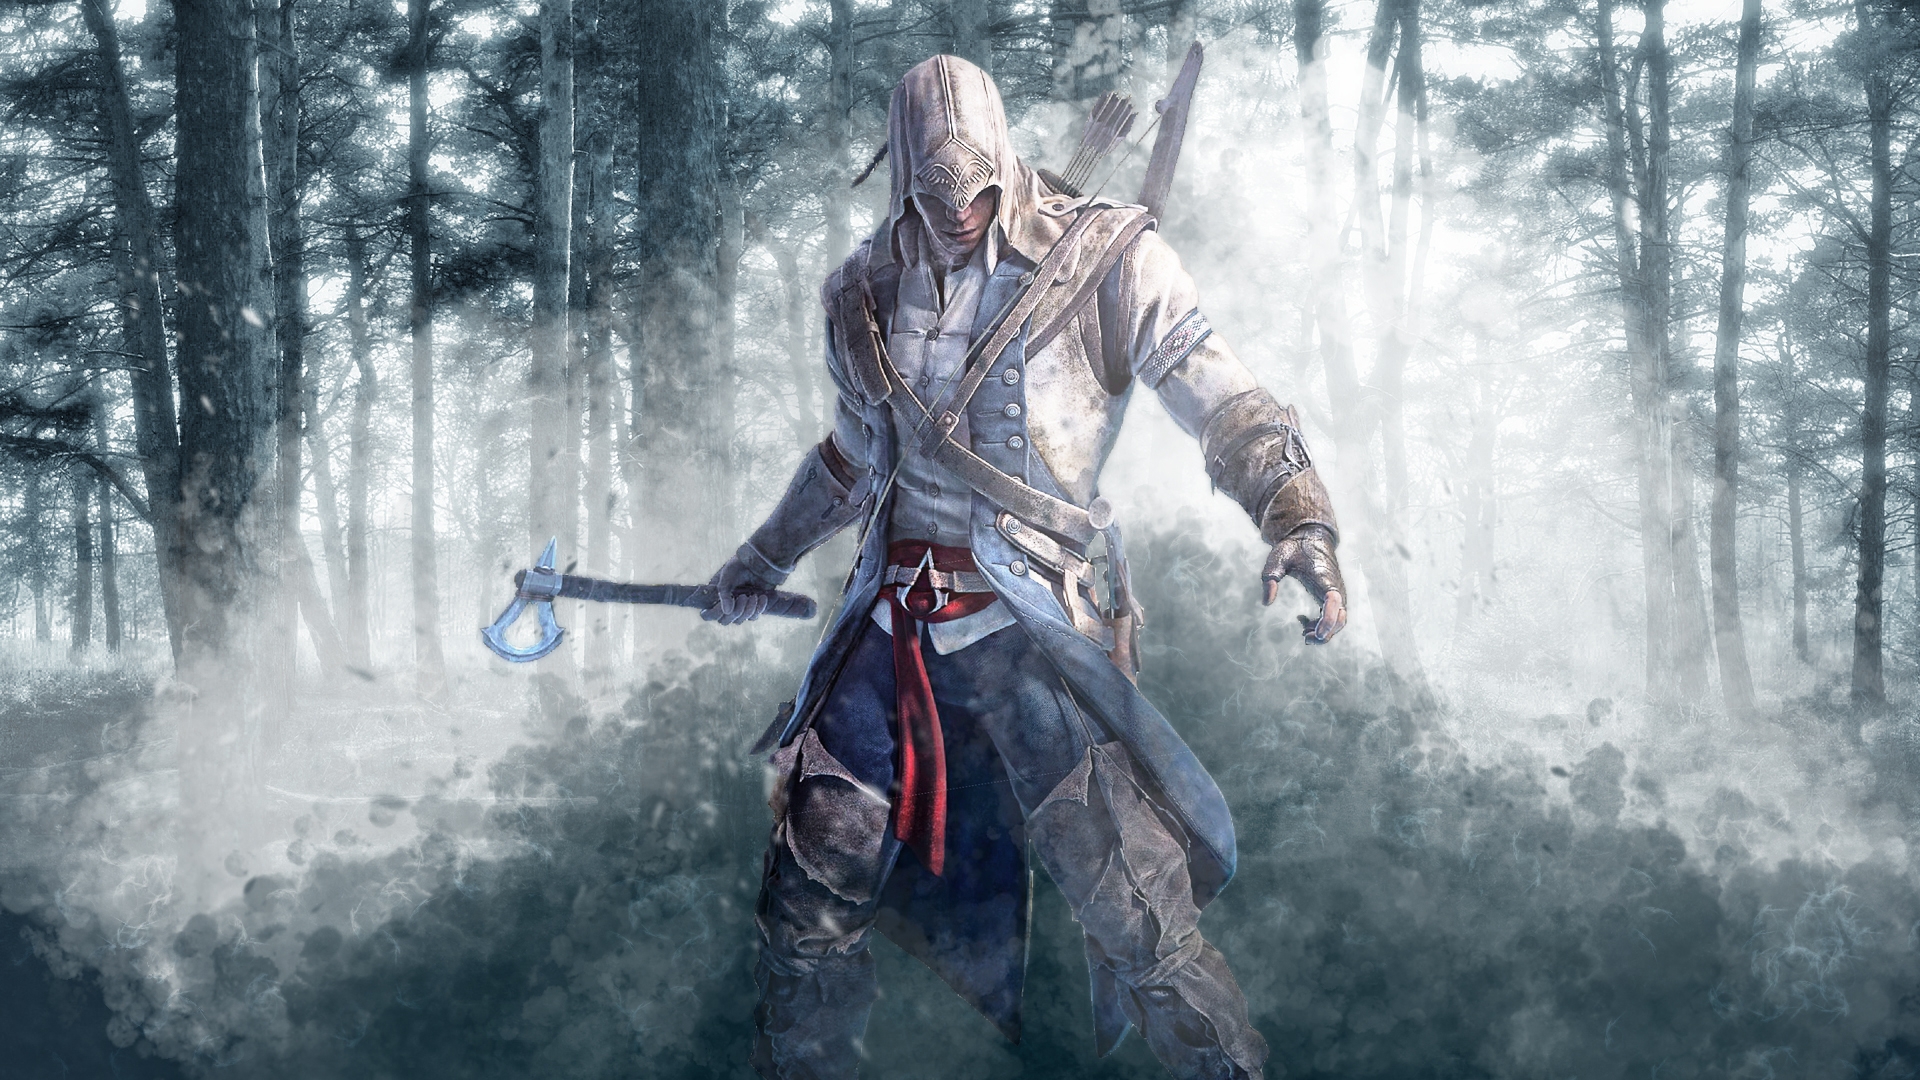 pic new posts: Hd Wallpaper Assassins Creed 3